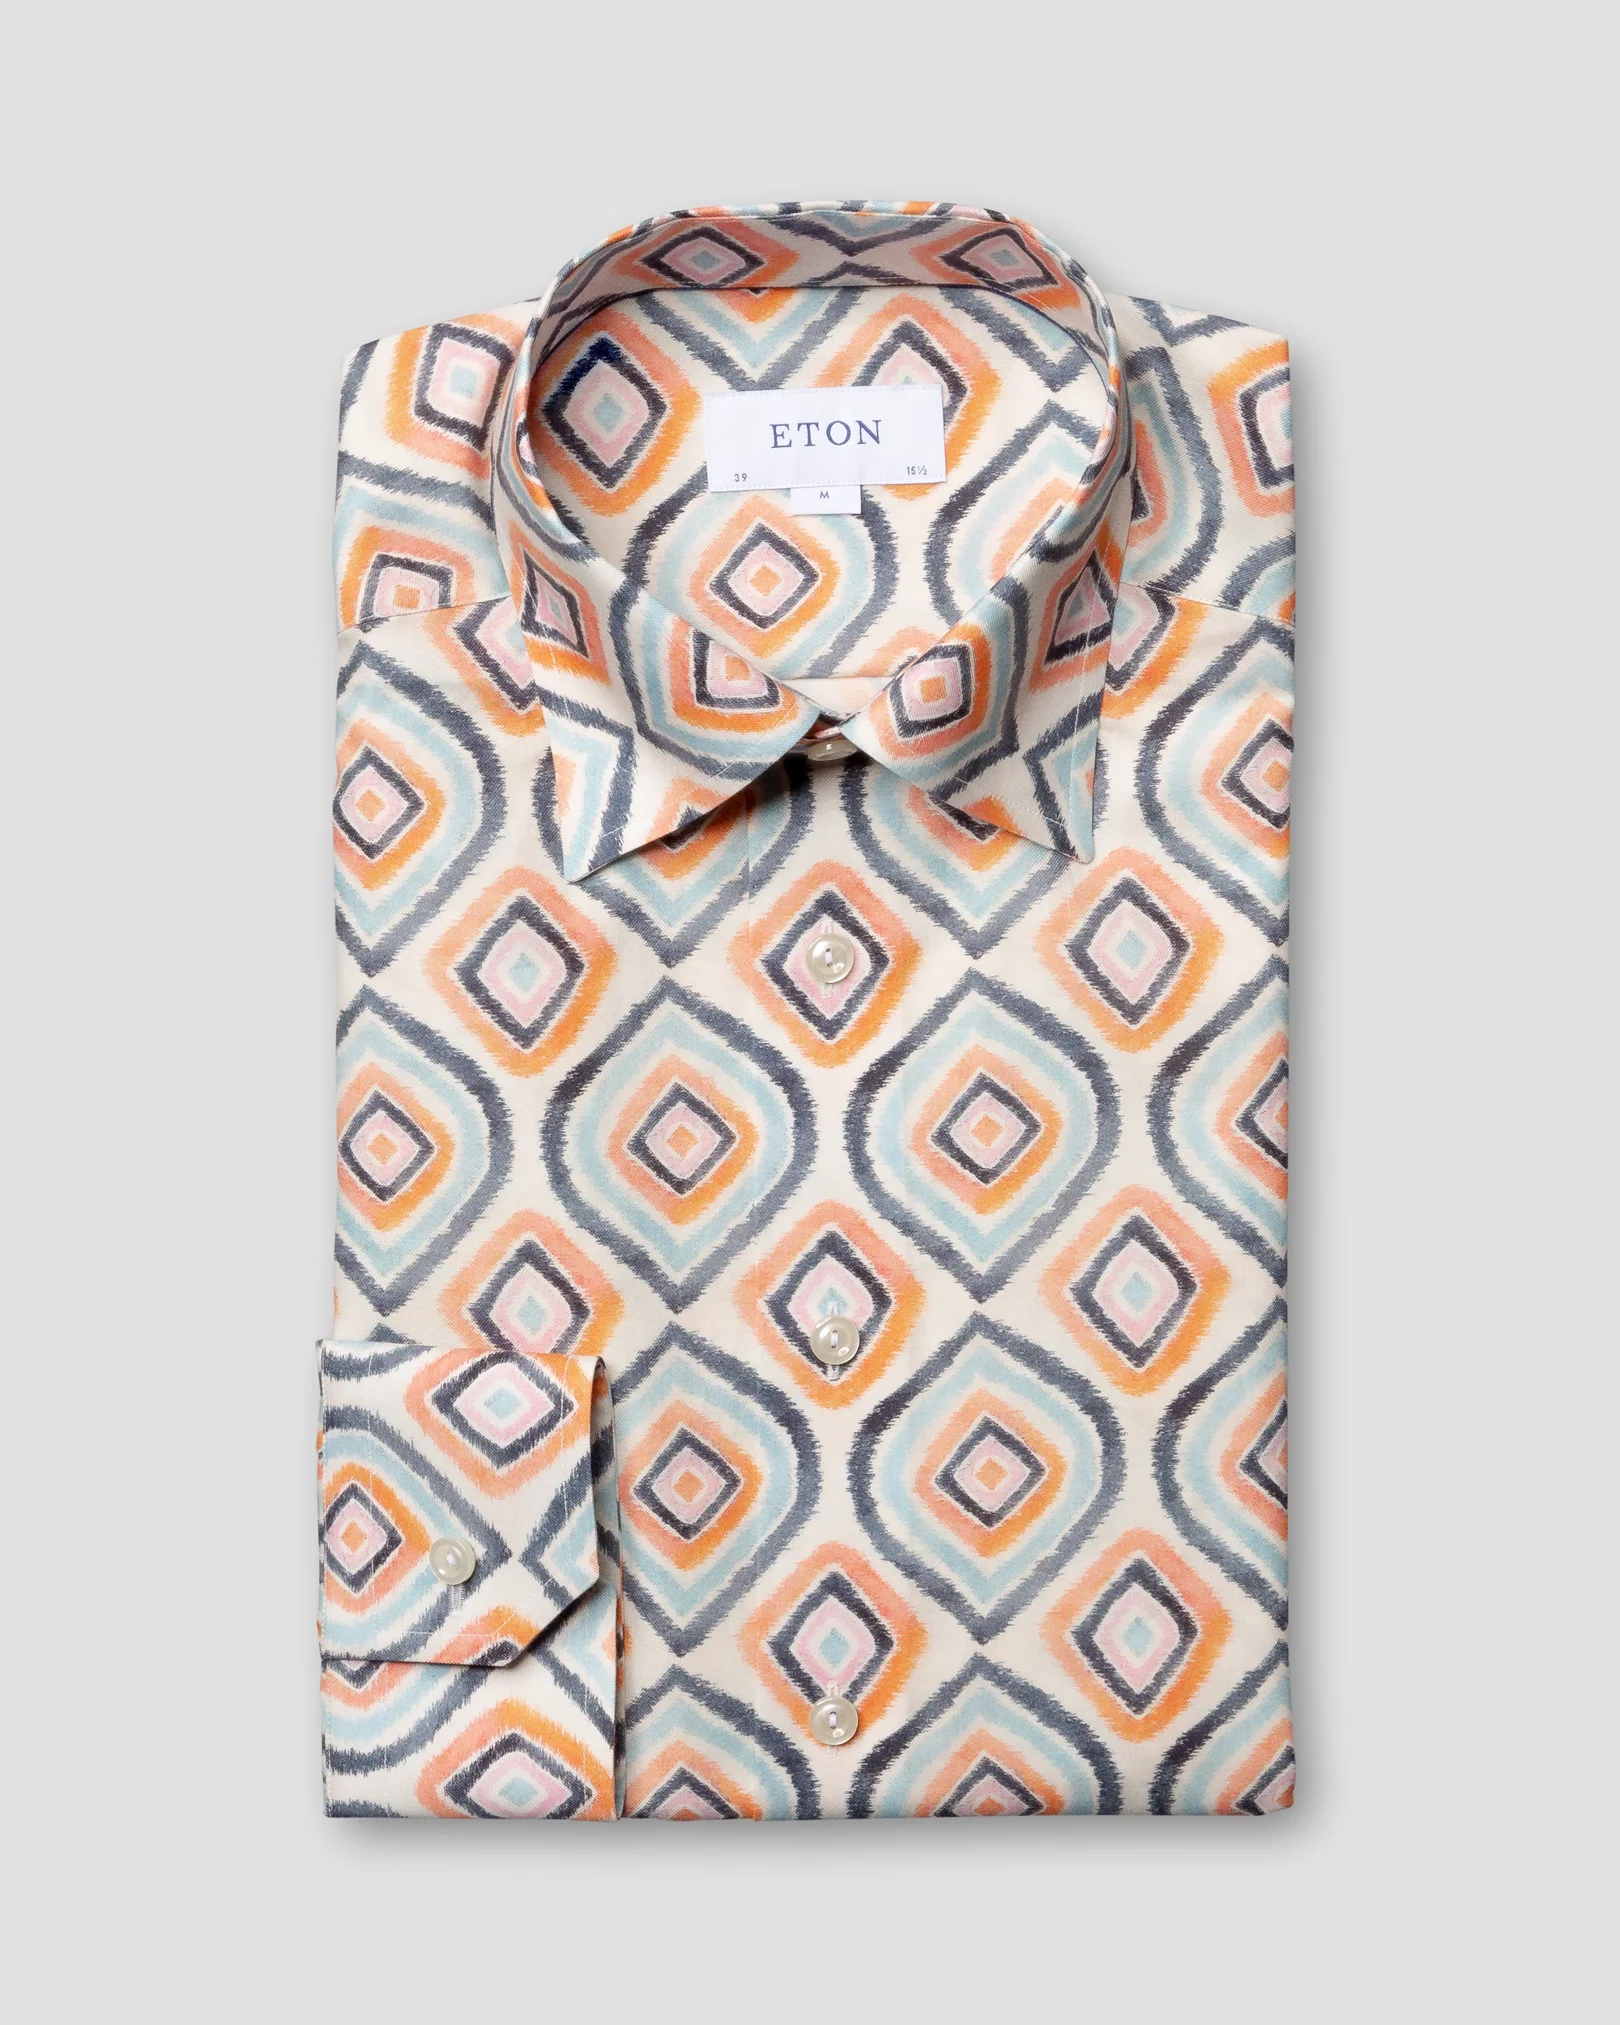 Eton - retro geometric print shirt